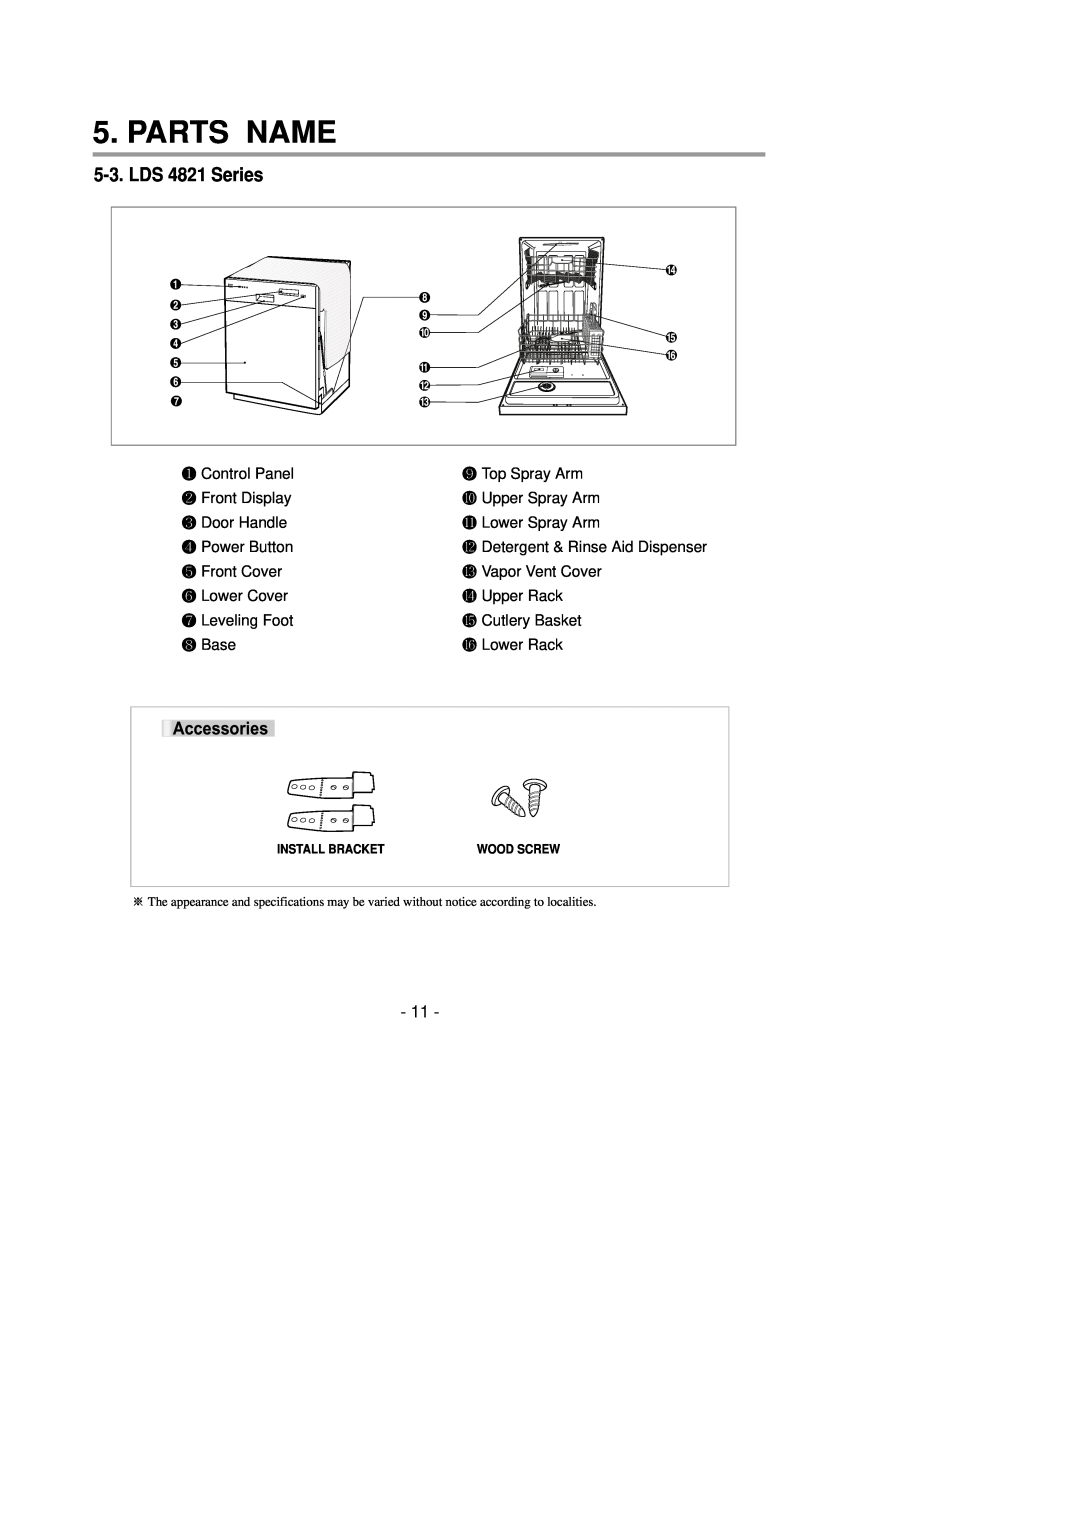 LG Electronics LDS4821(WW service manual Parts Name, LDS 4821 Series 